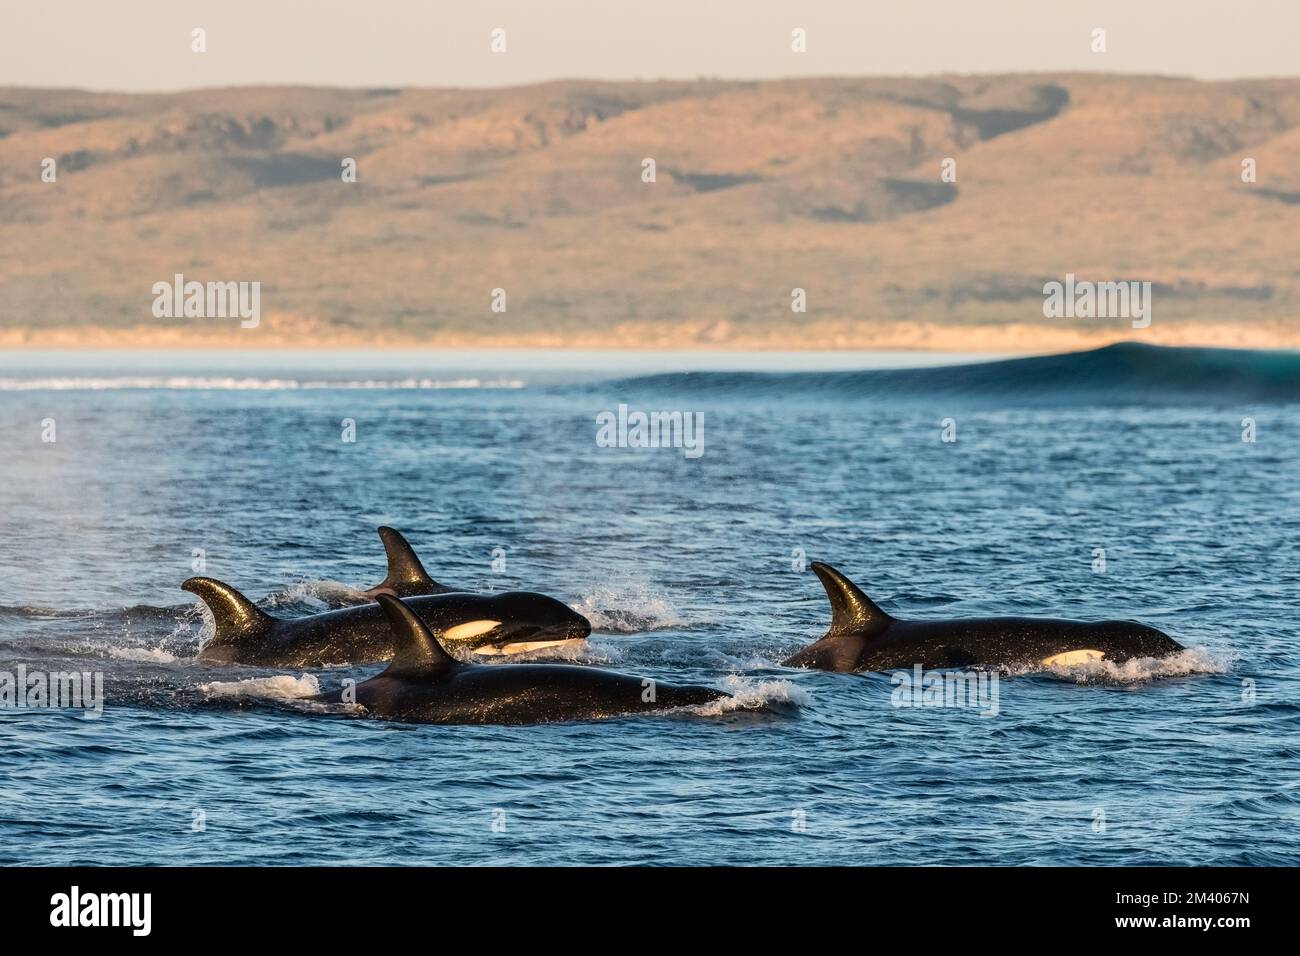 A pod of mammal eating killer whales, Orcinus orca, surfacing on Ningaloo Reef, Western Australia, Australia. Stock Photo